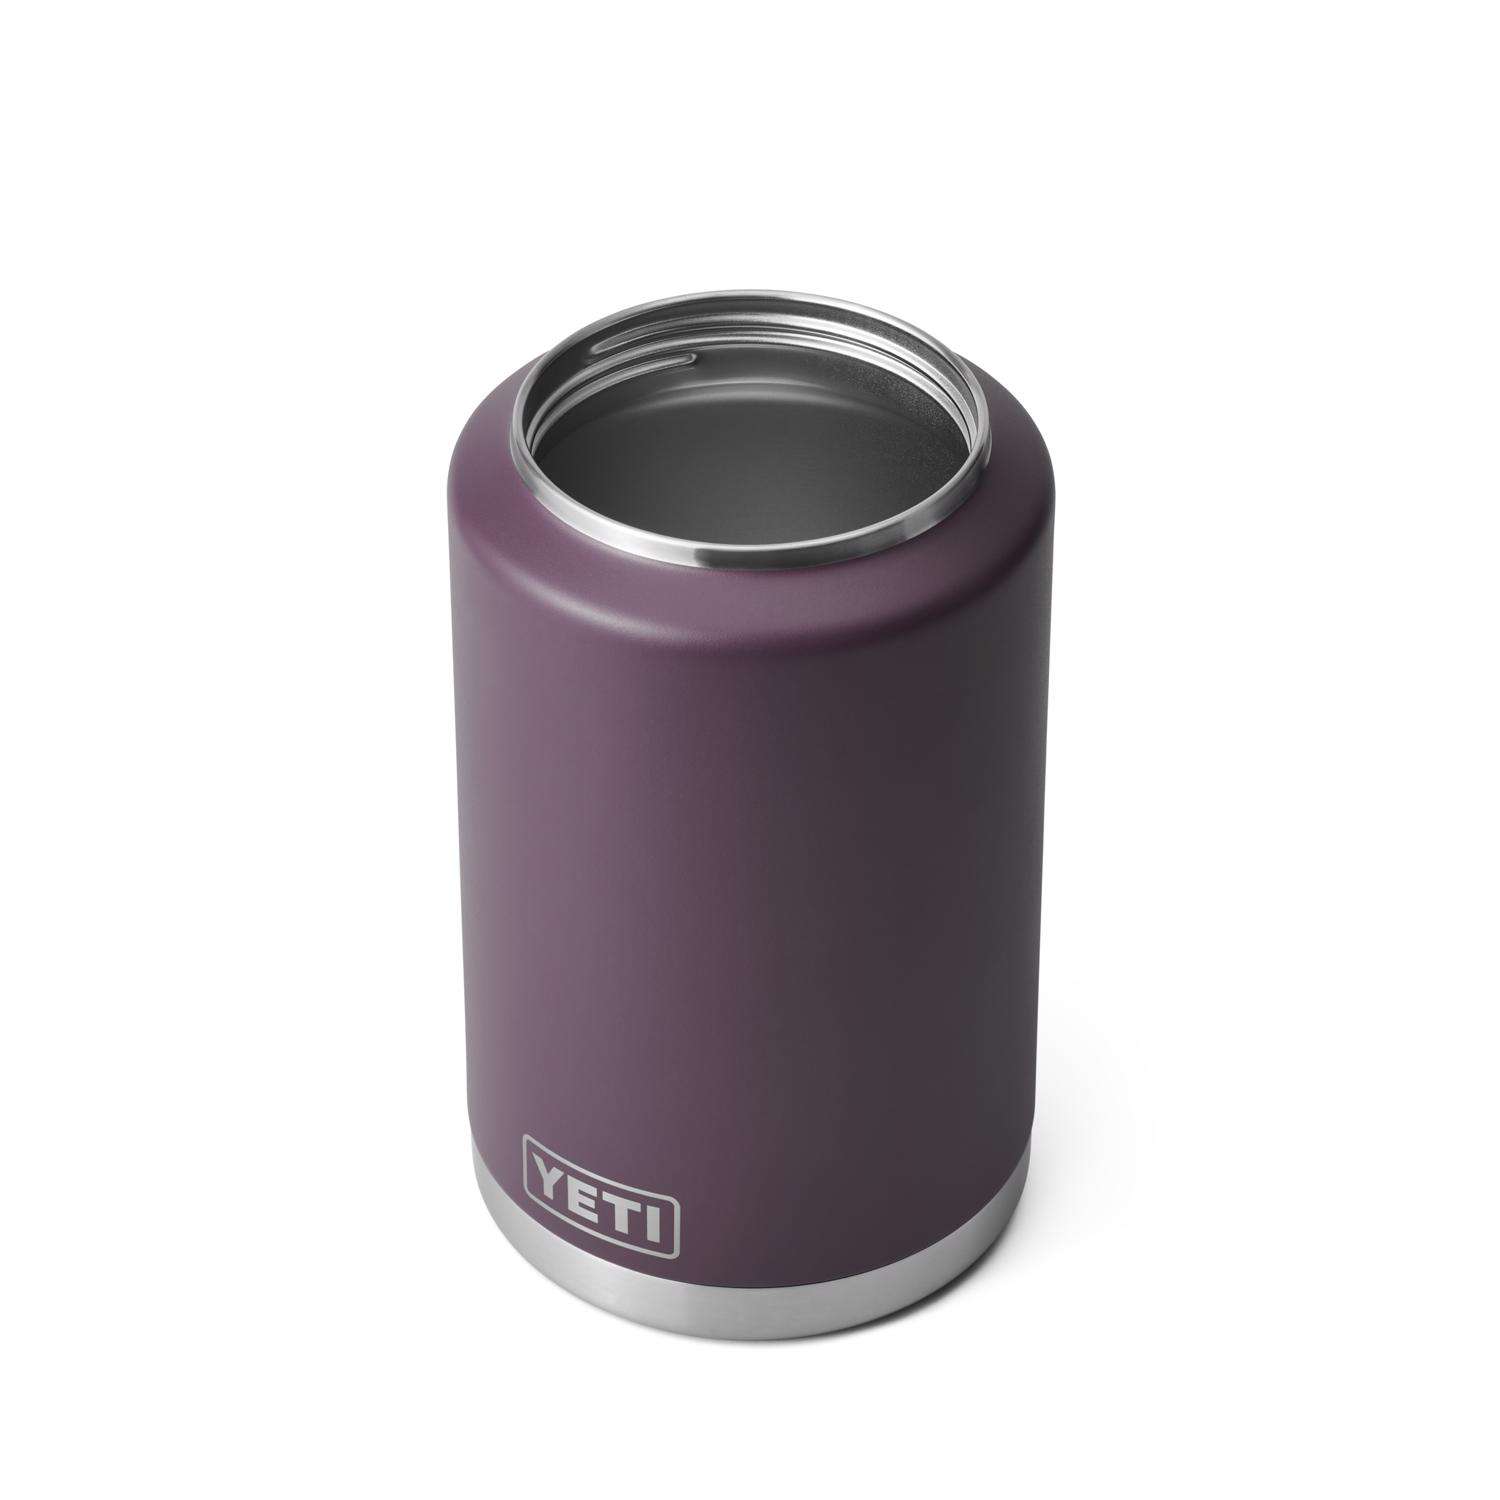 YETI - Rambler 12 oz Colster Can Cooler - Nordic Purple